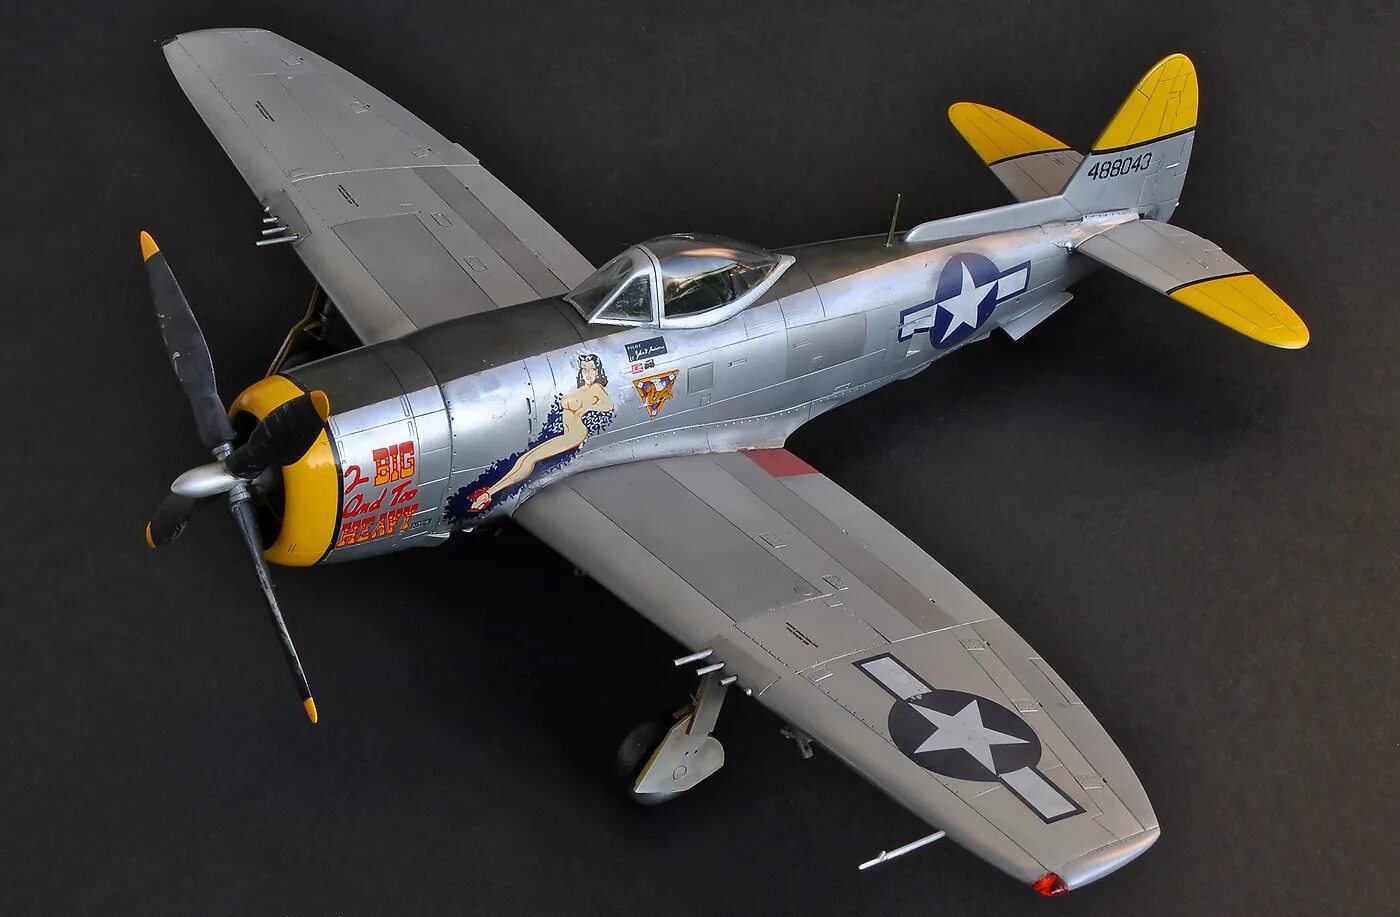 1 47 48. P-47 Thunderbolt 1/48. Самолет Тандерболт p-47 модель. Republic p-47n Thunderbolt. Тандерболт звезда 1/48.